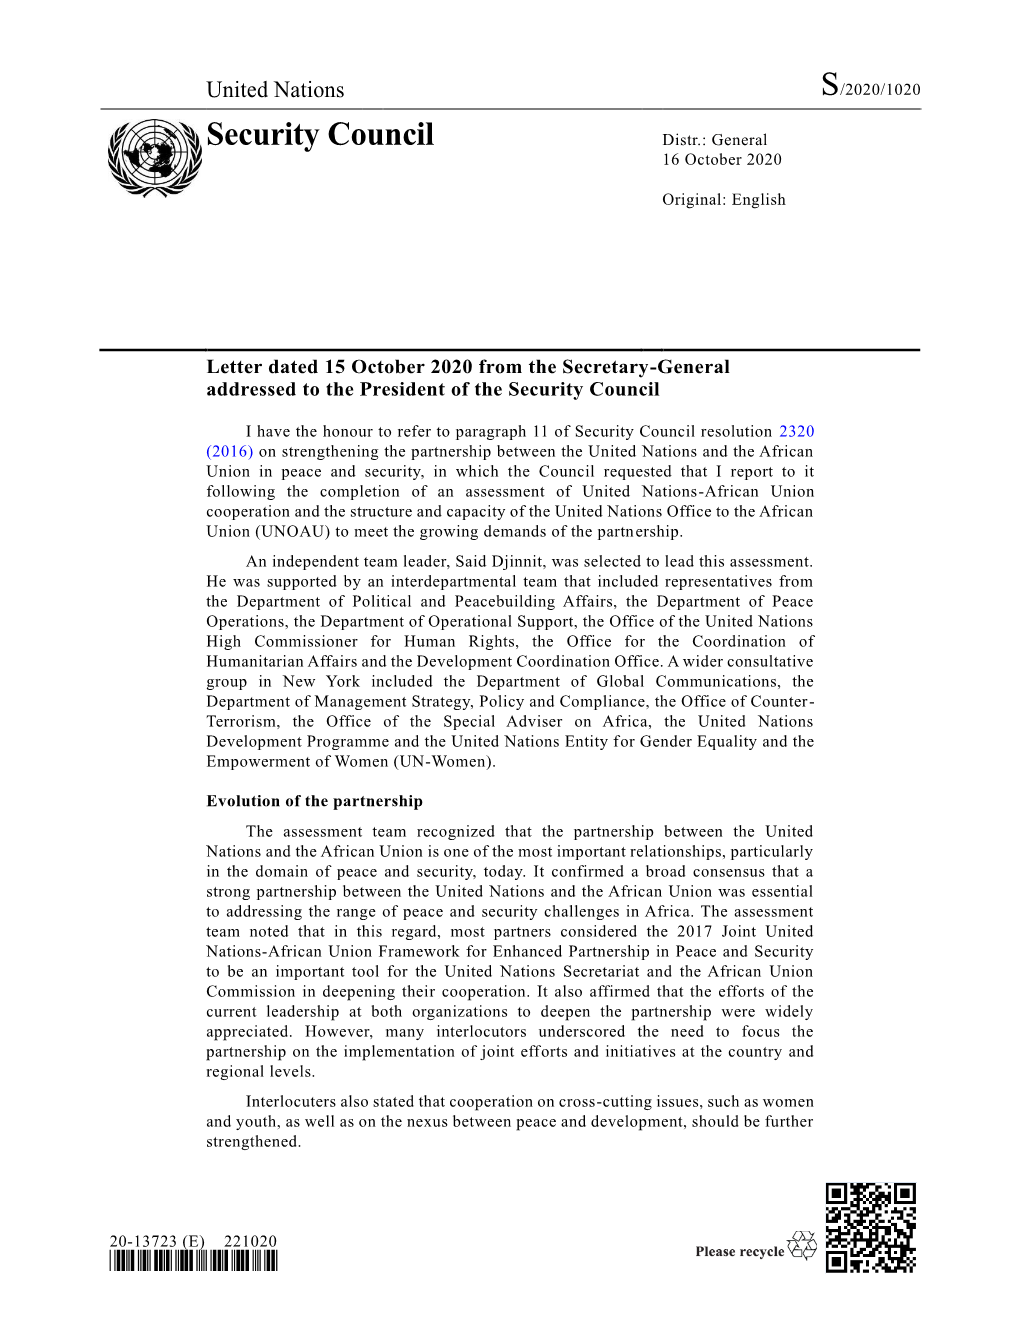 Security Council Distr.: General 16 October 2020